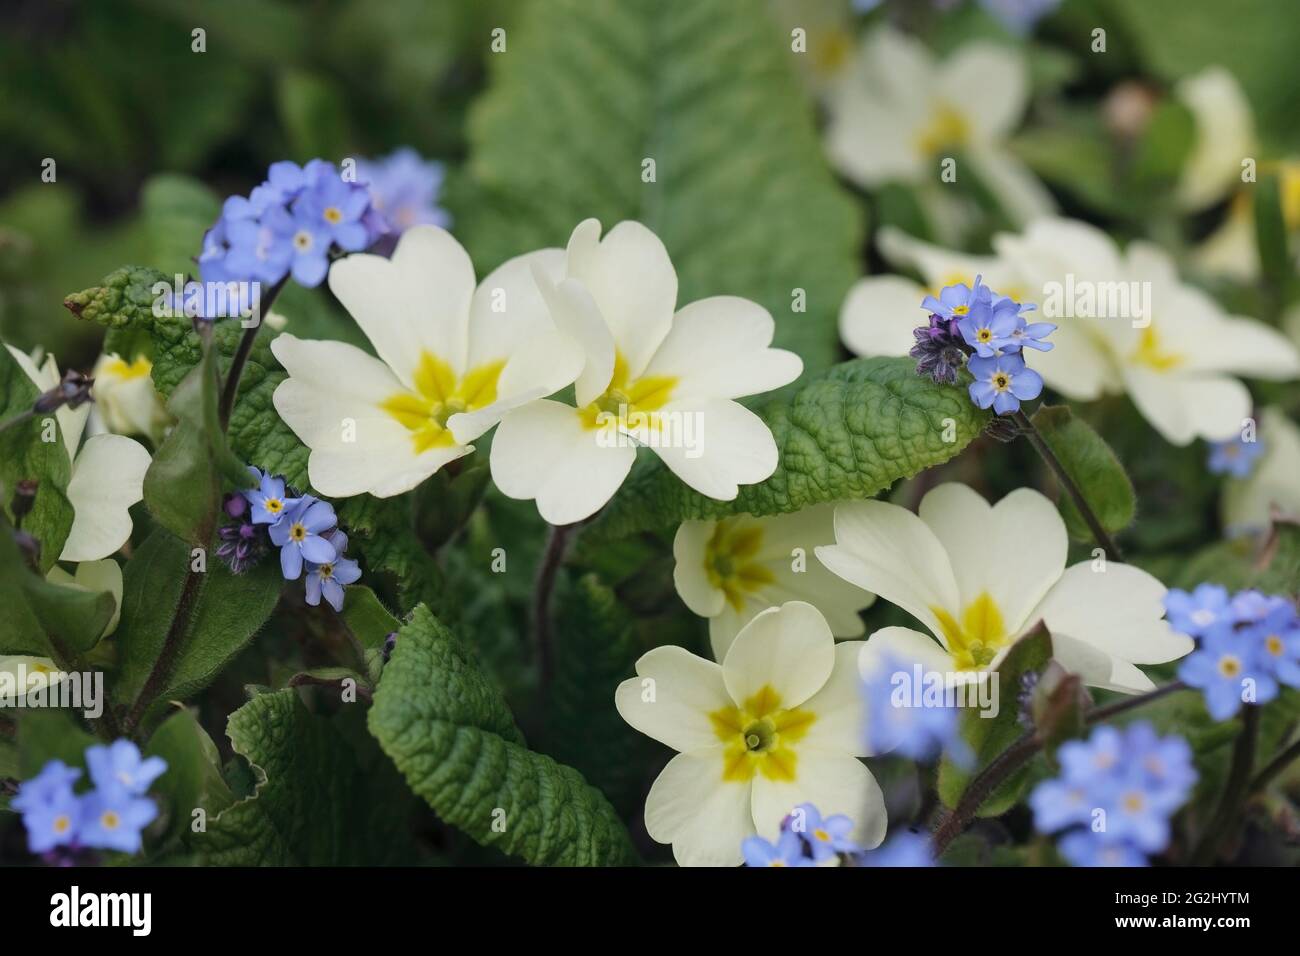 Primula vulgaris and Myosotis sylvatica in the garden. Primroses and Forget Me Nots. Stock Photo